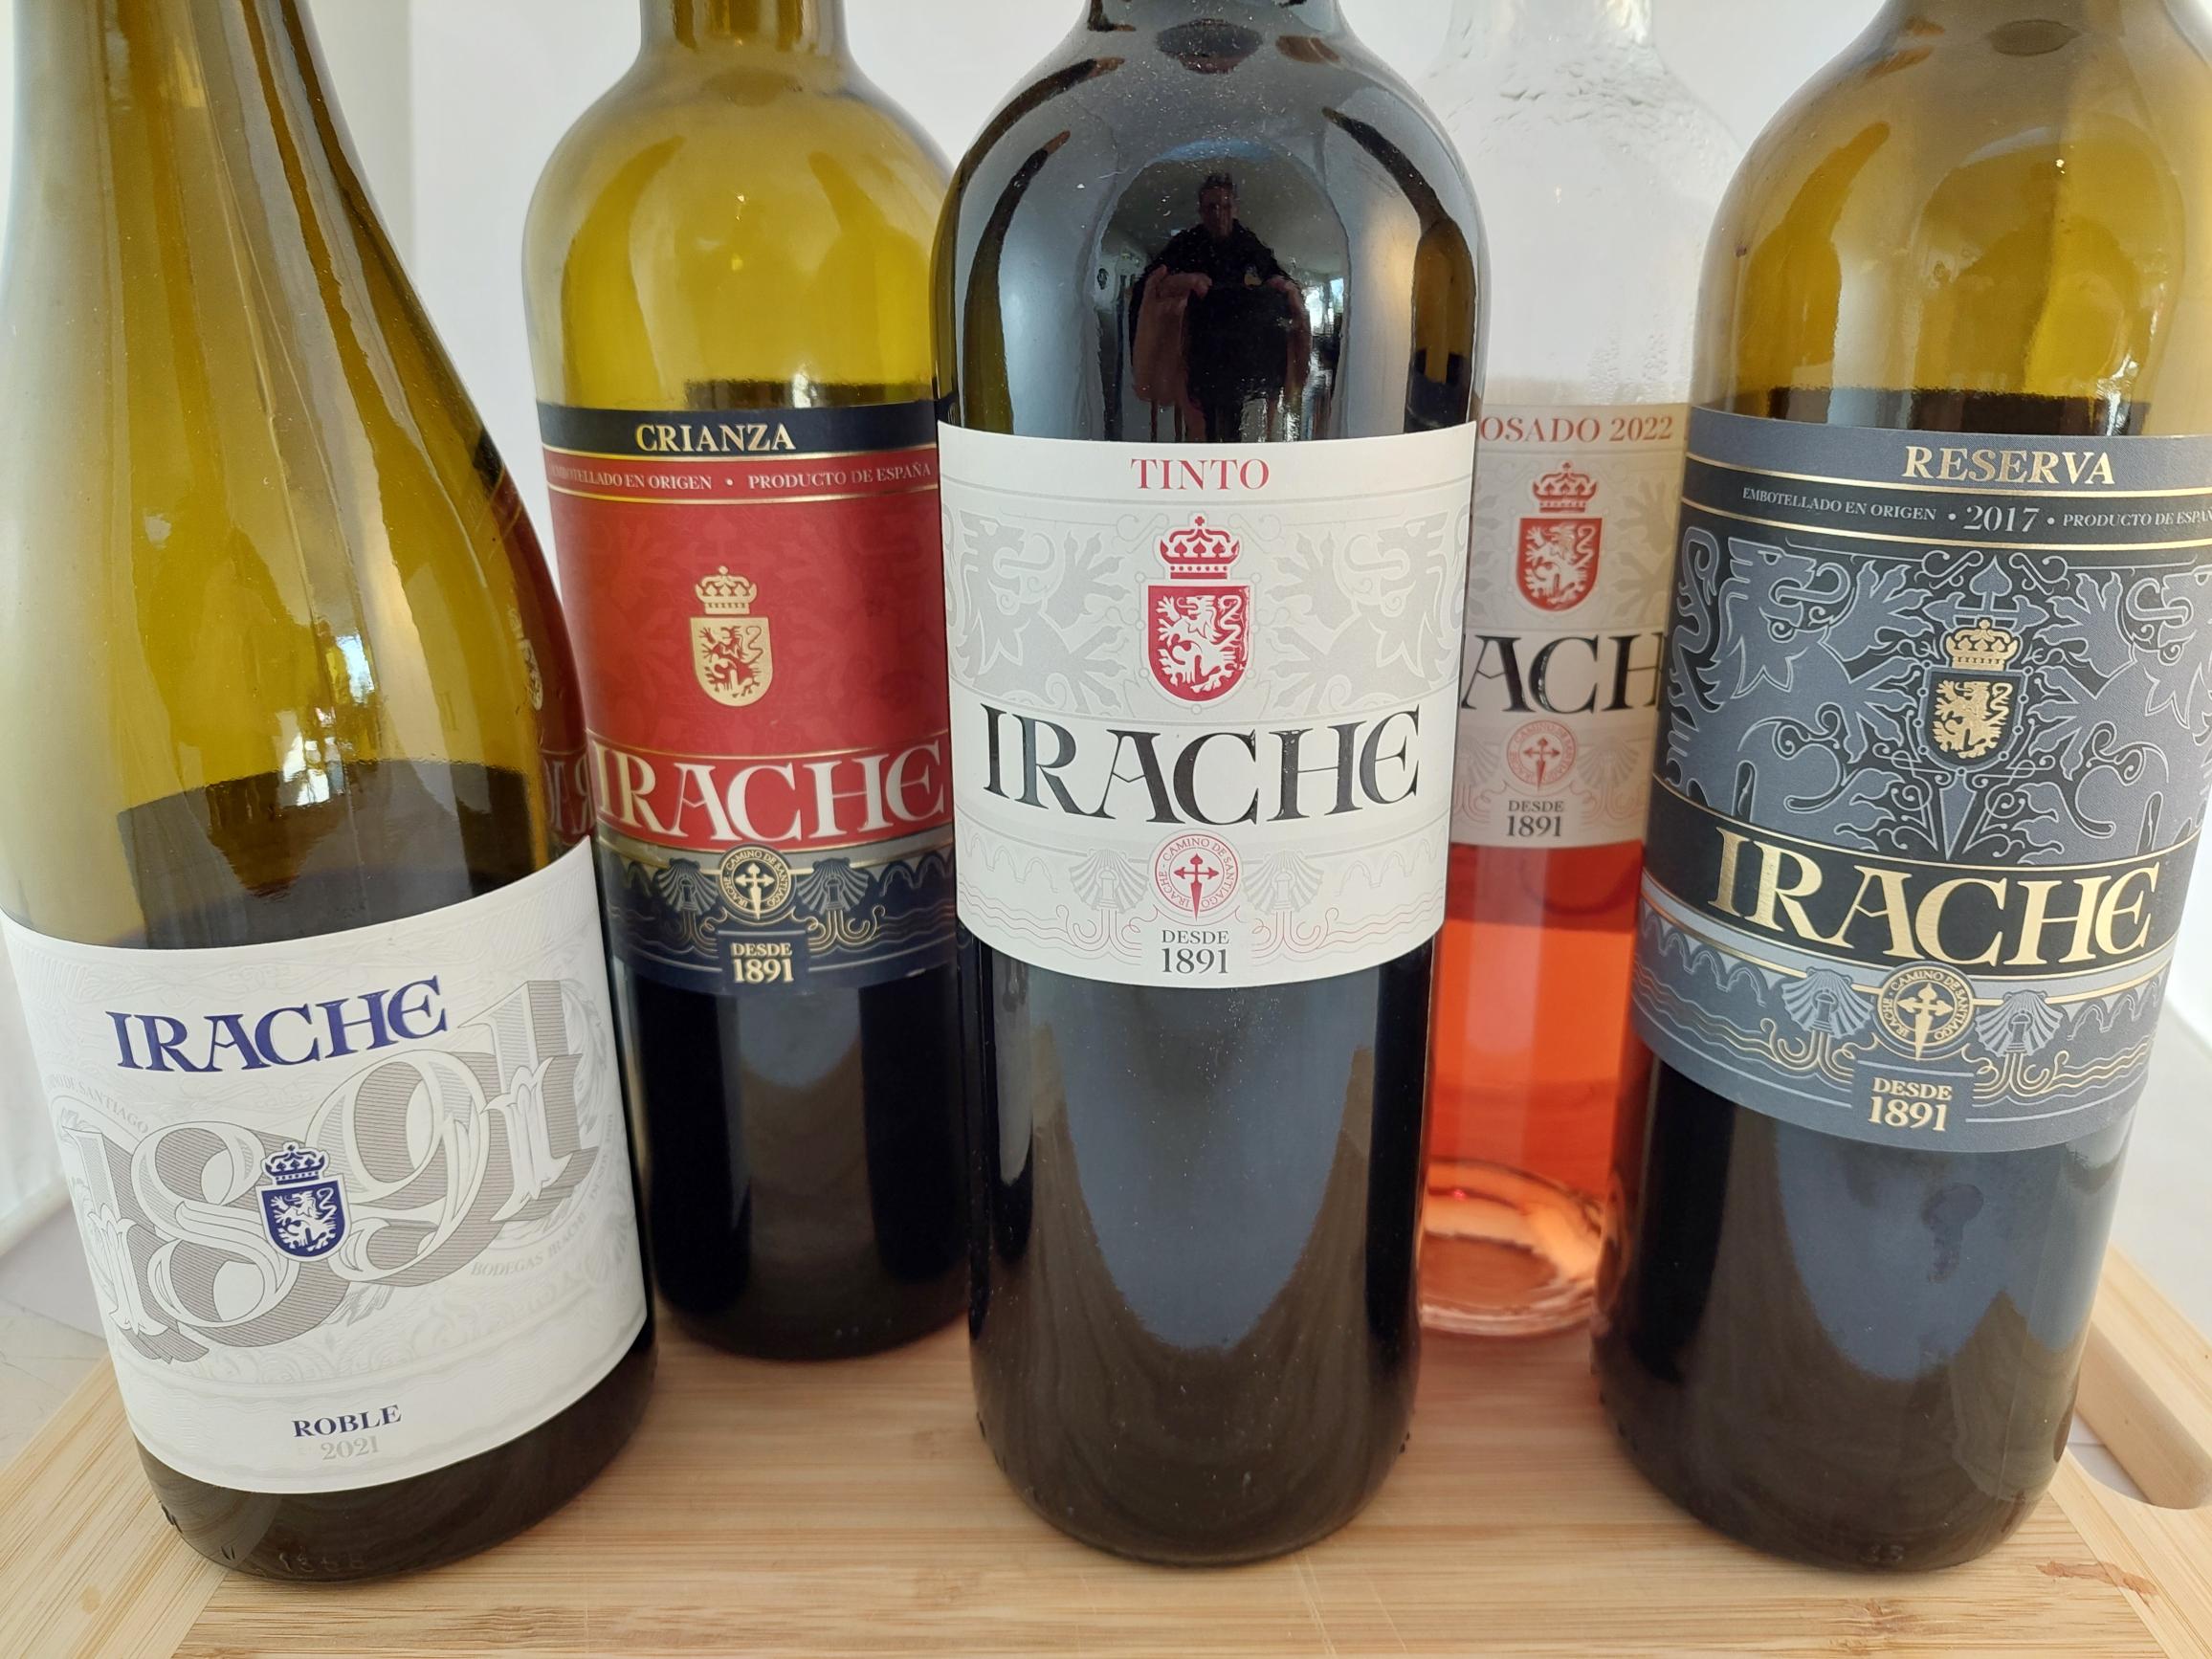 Irache wines of Navarra